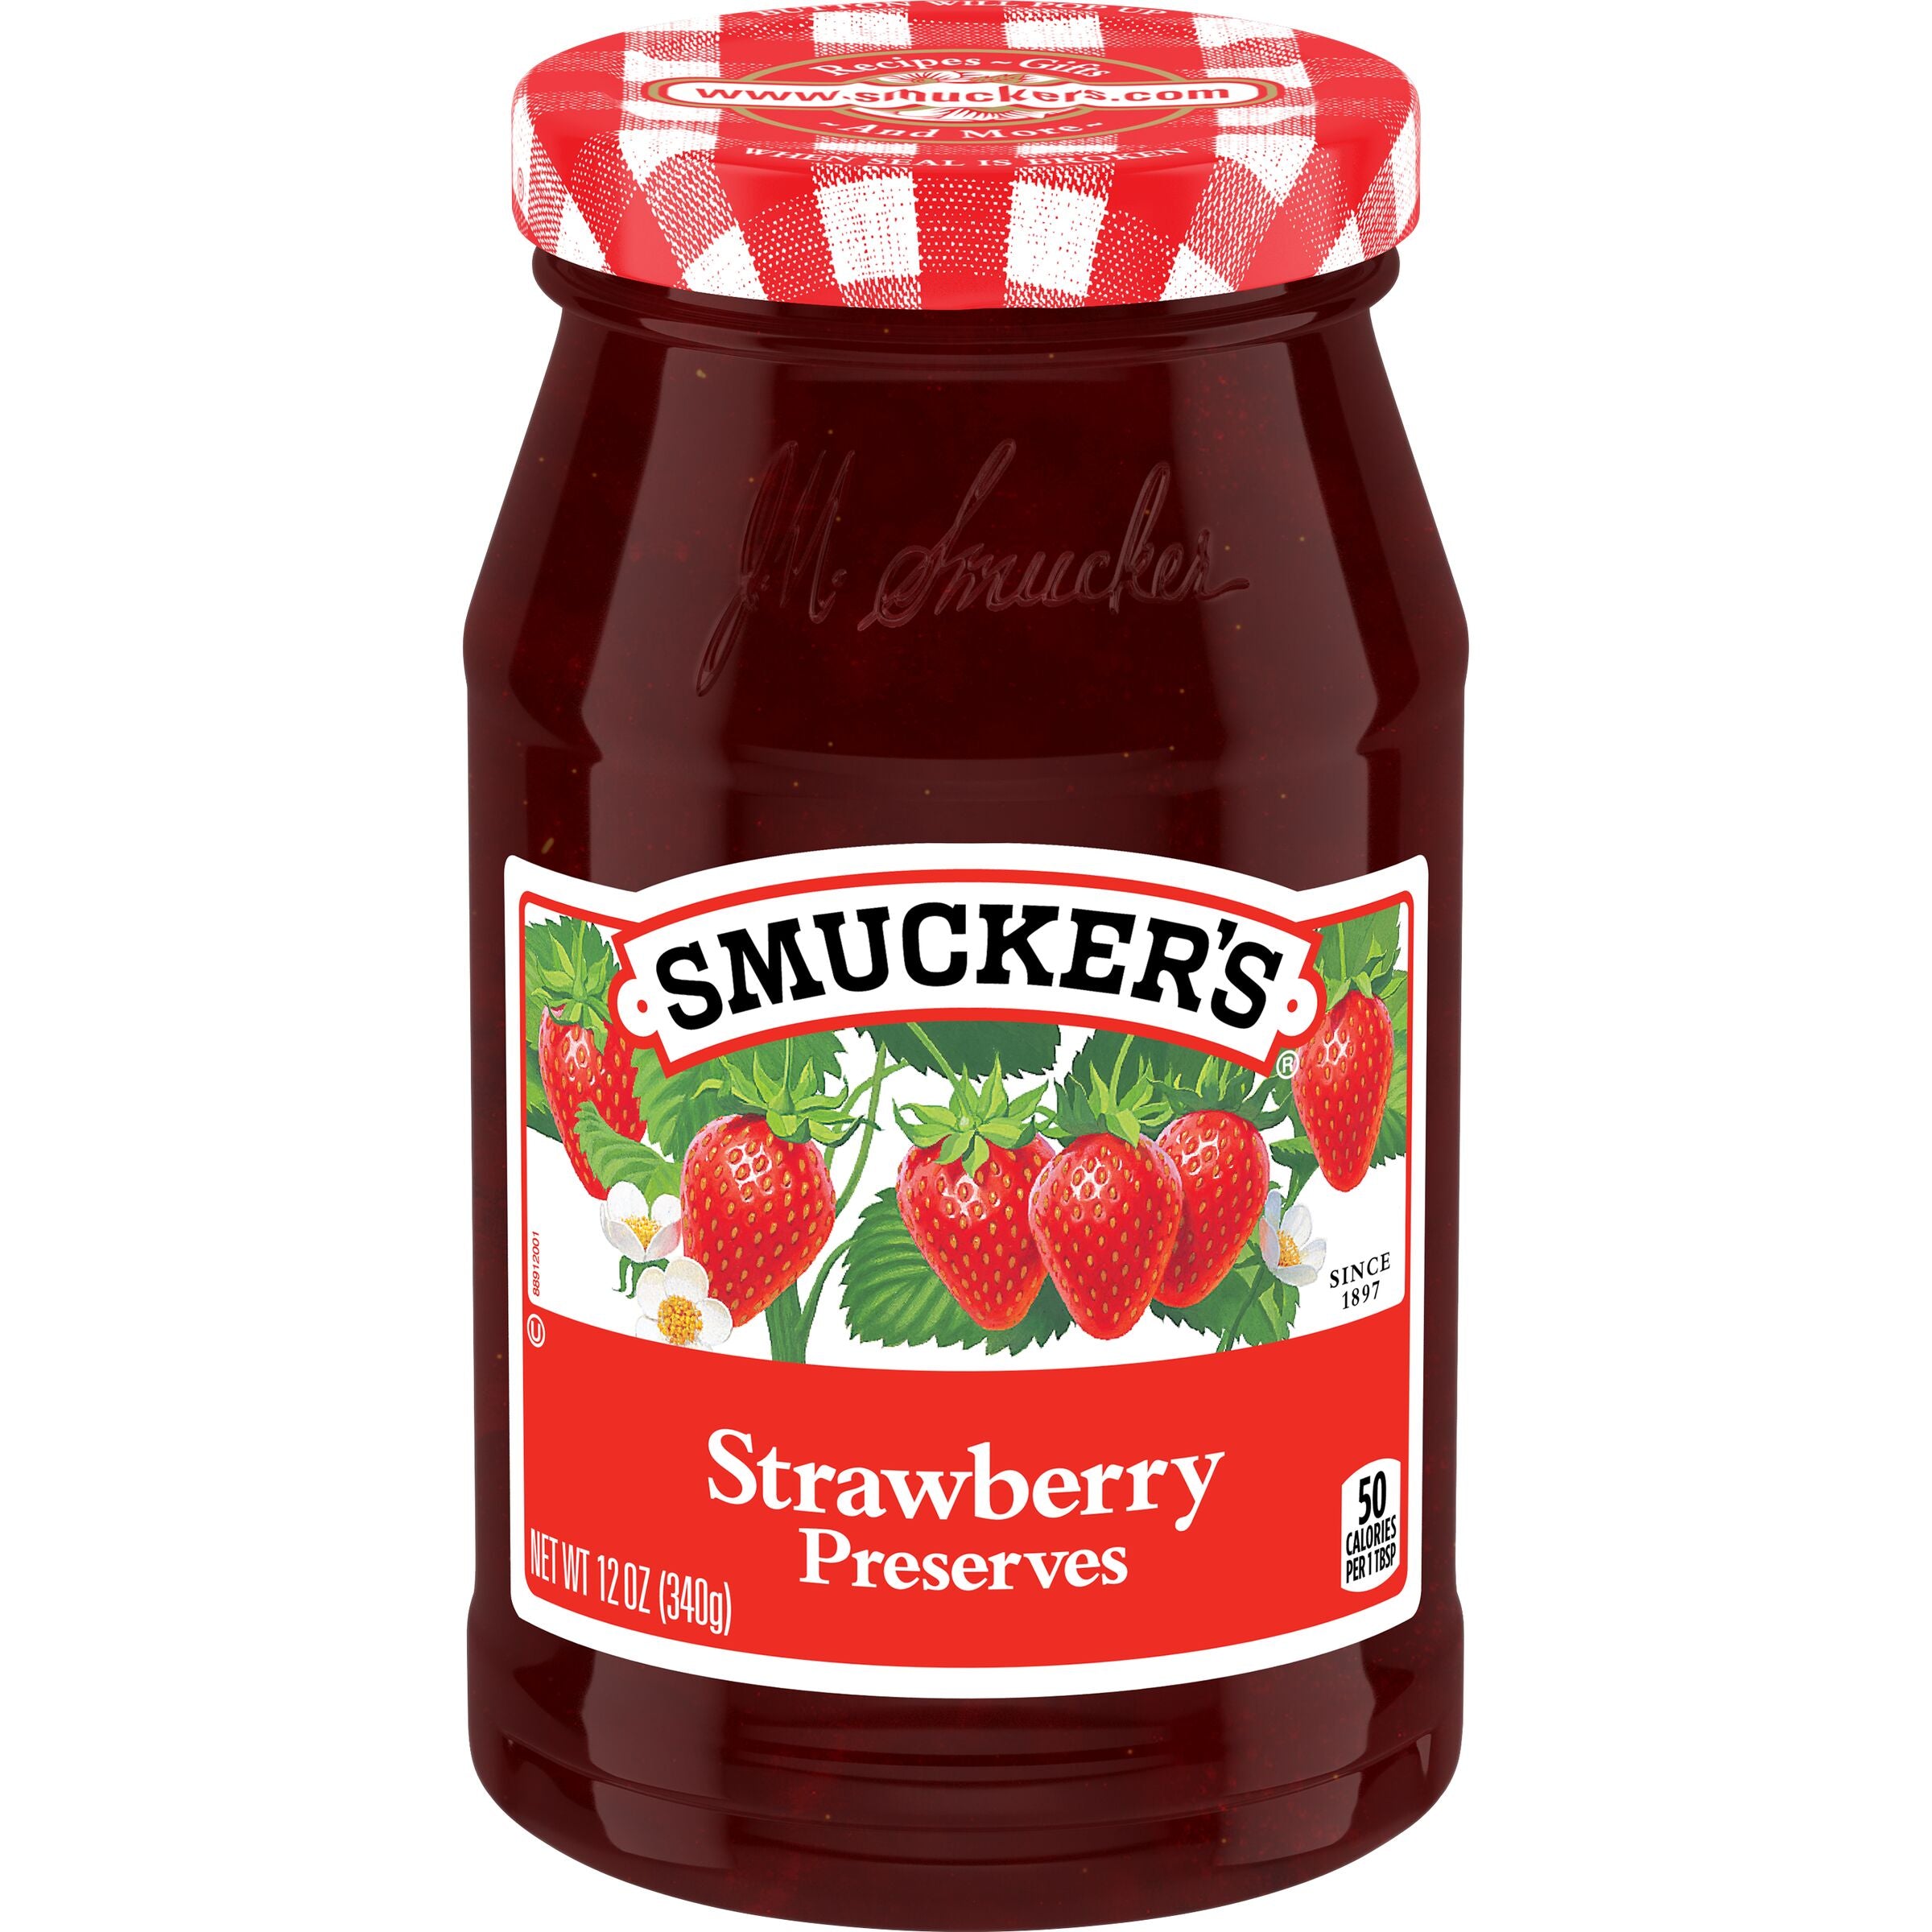 Smucker's Strawberry Preserves